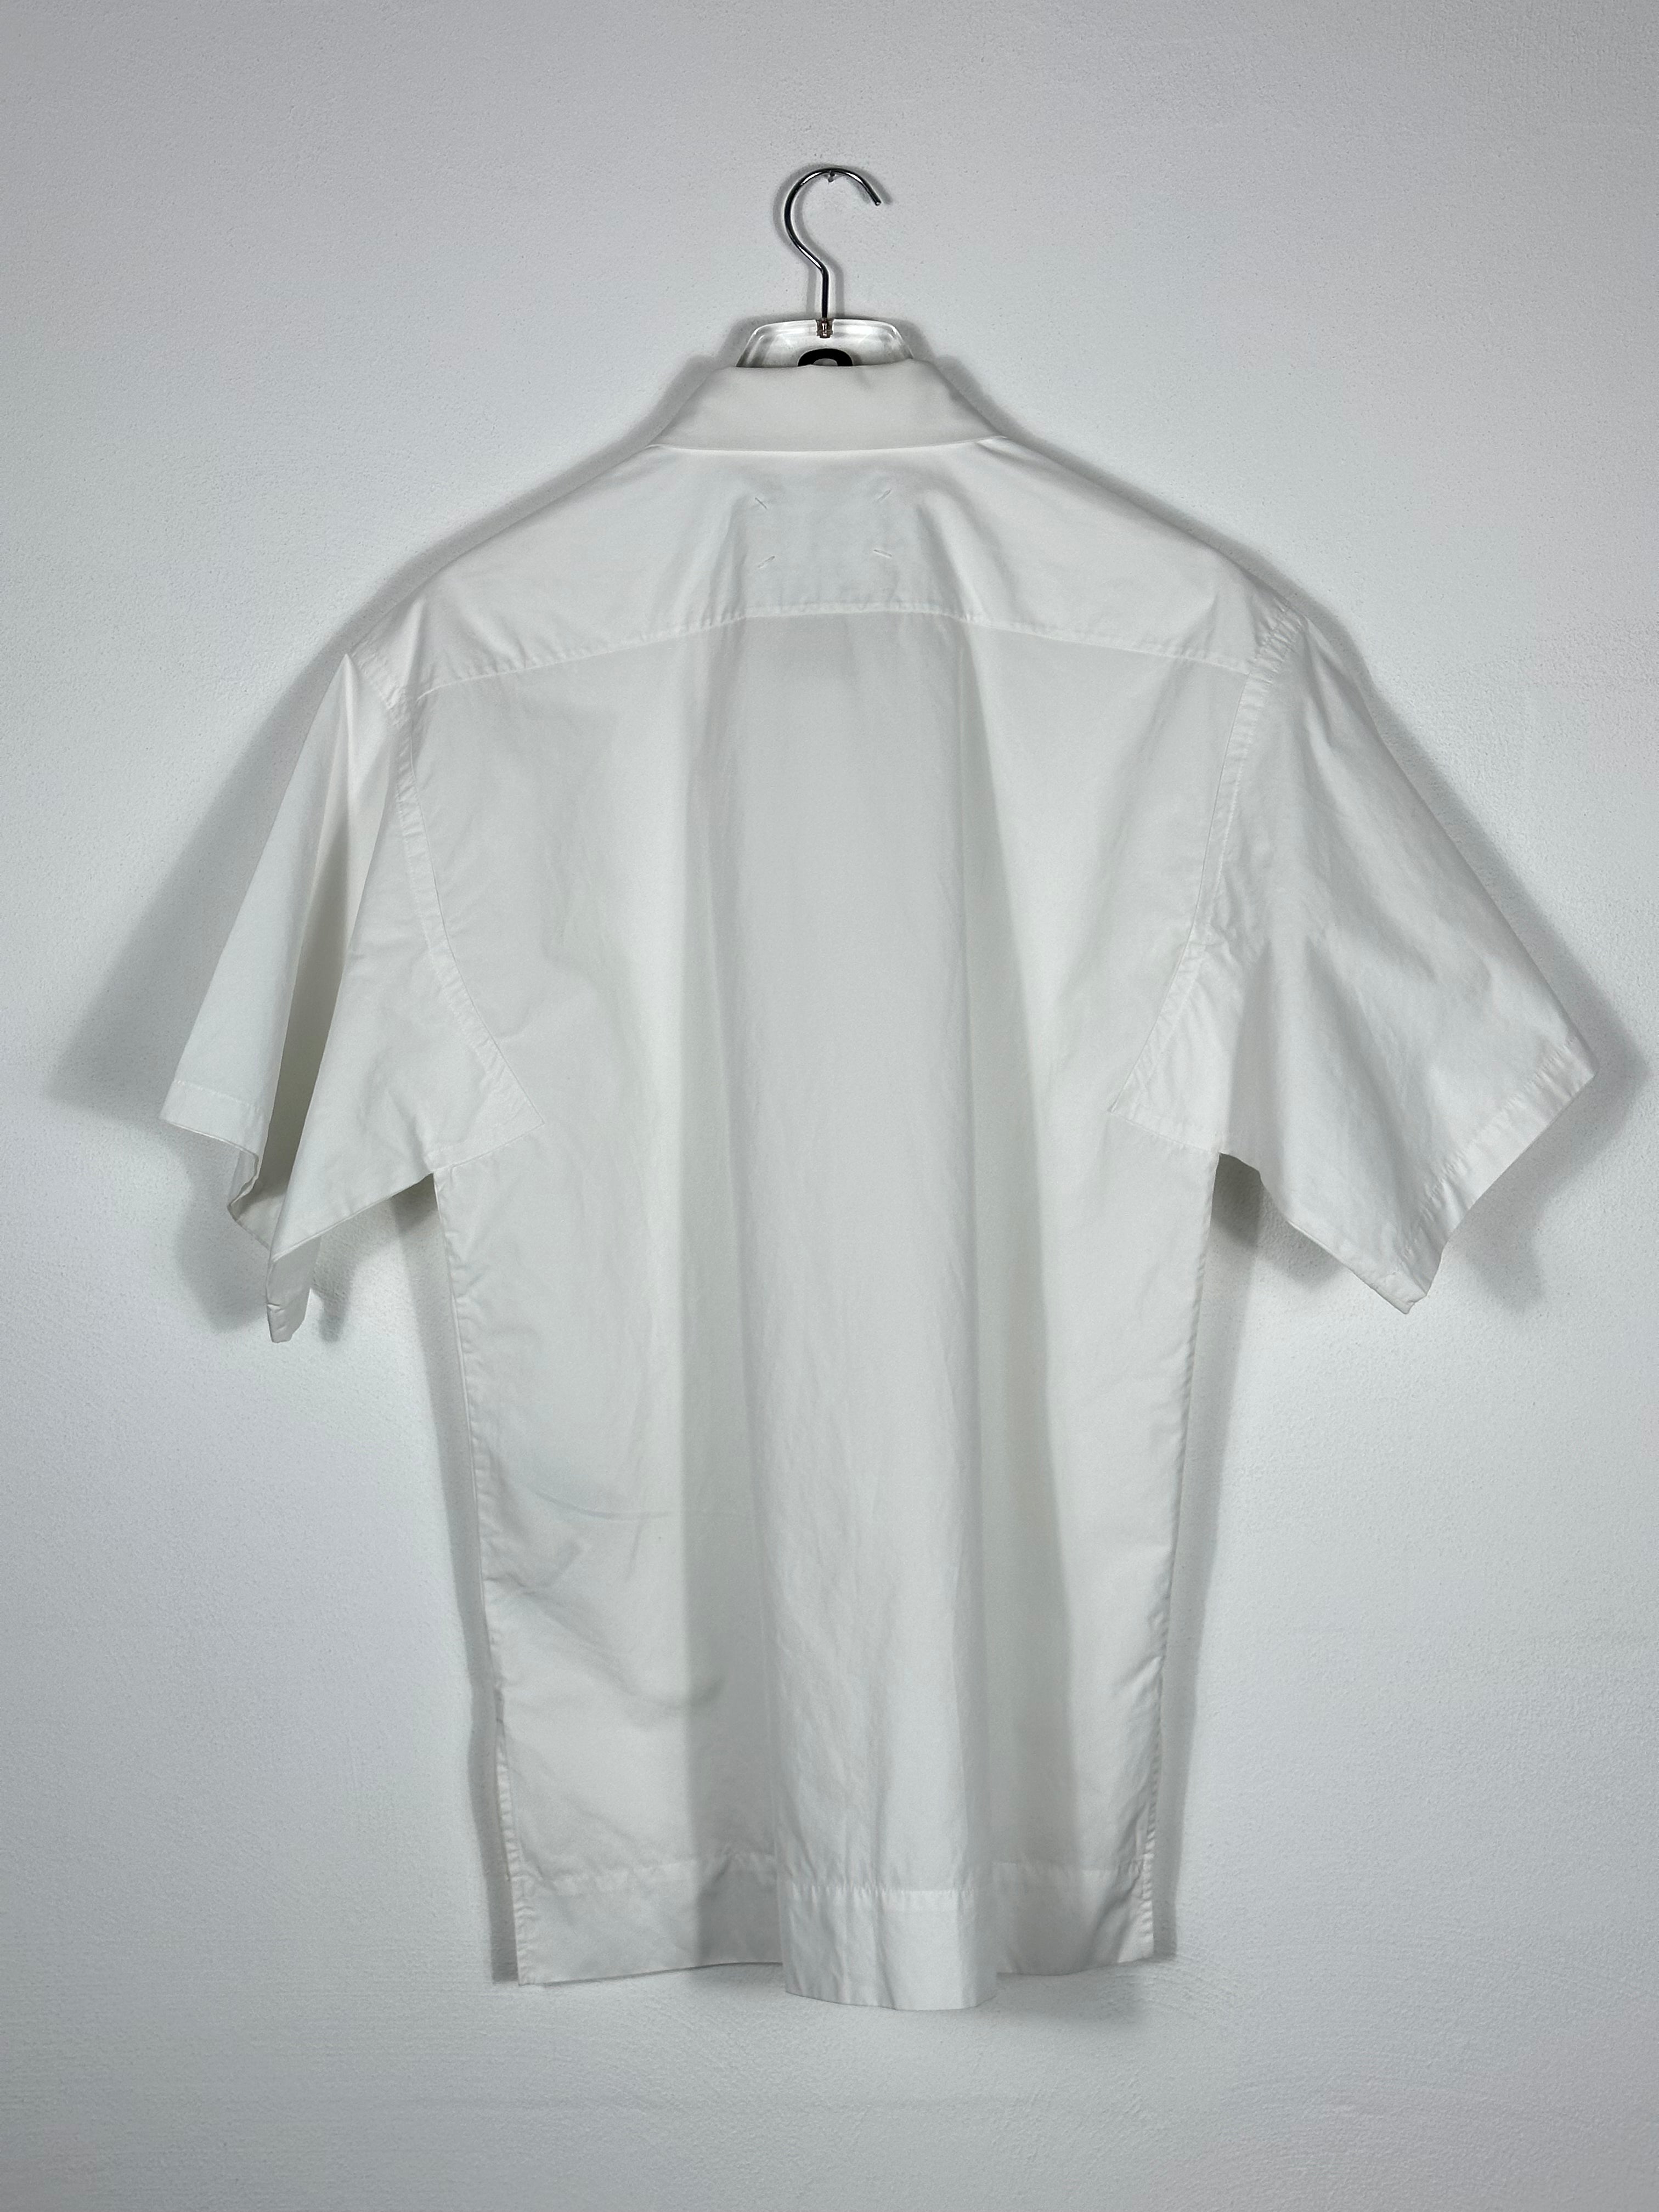 Short Sleeves Shirt by Sfera Ebbasta